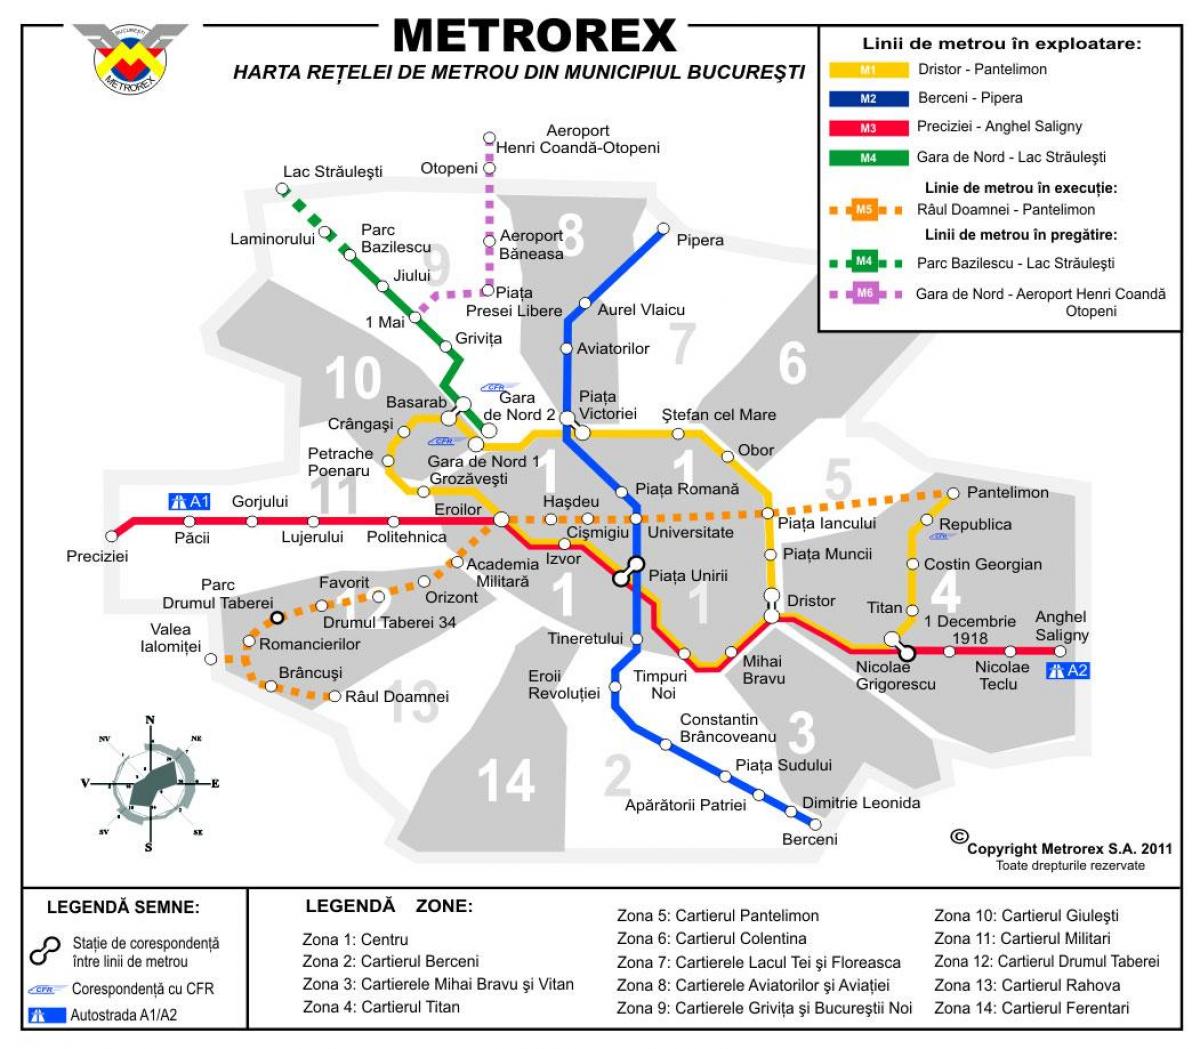 Mapa metrorex 